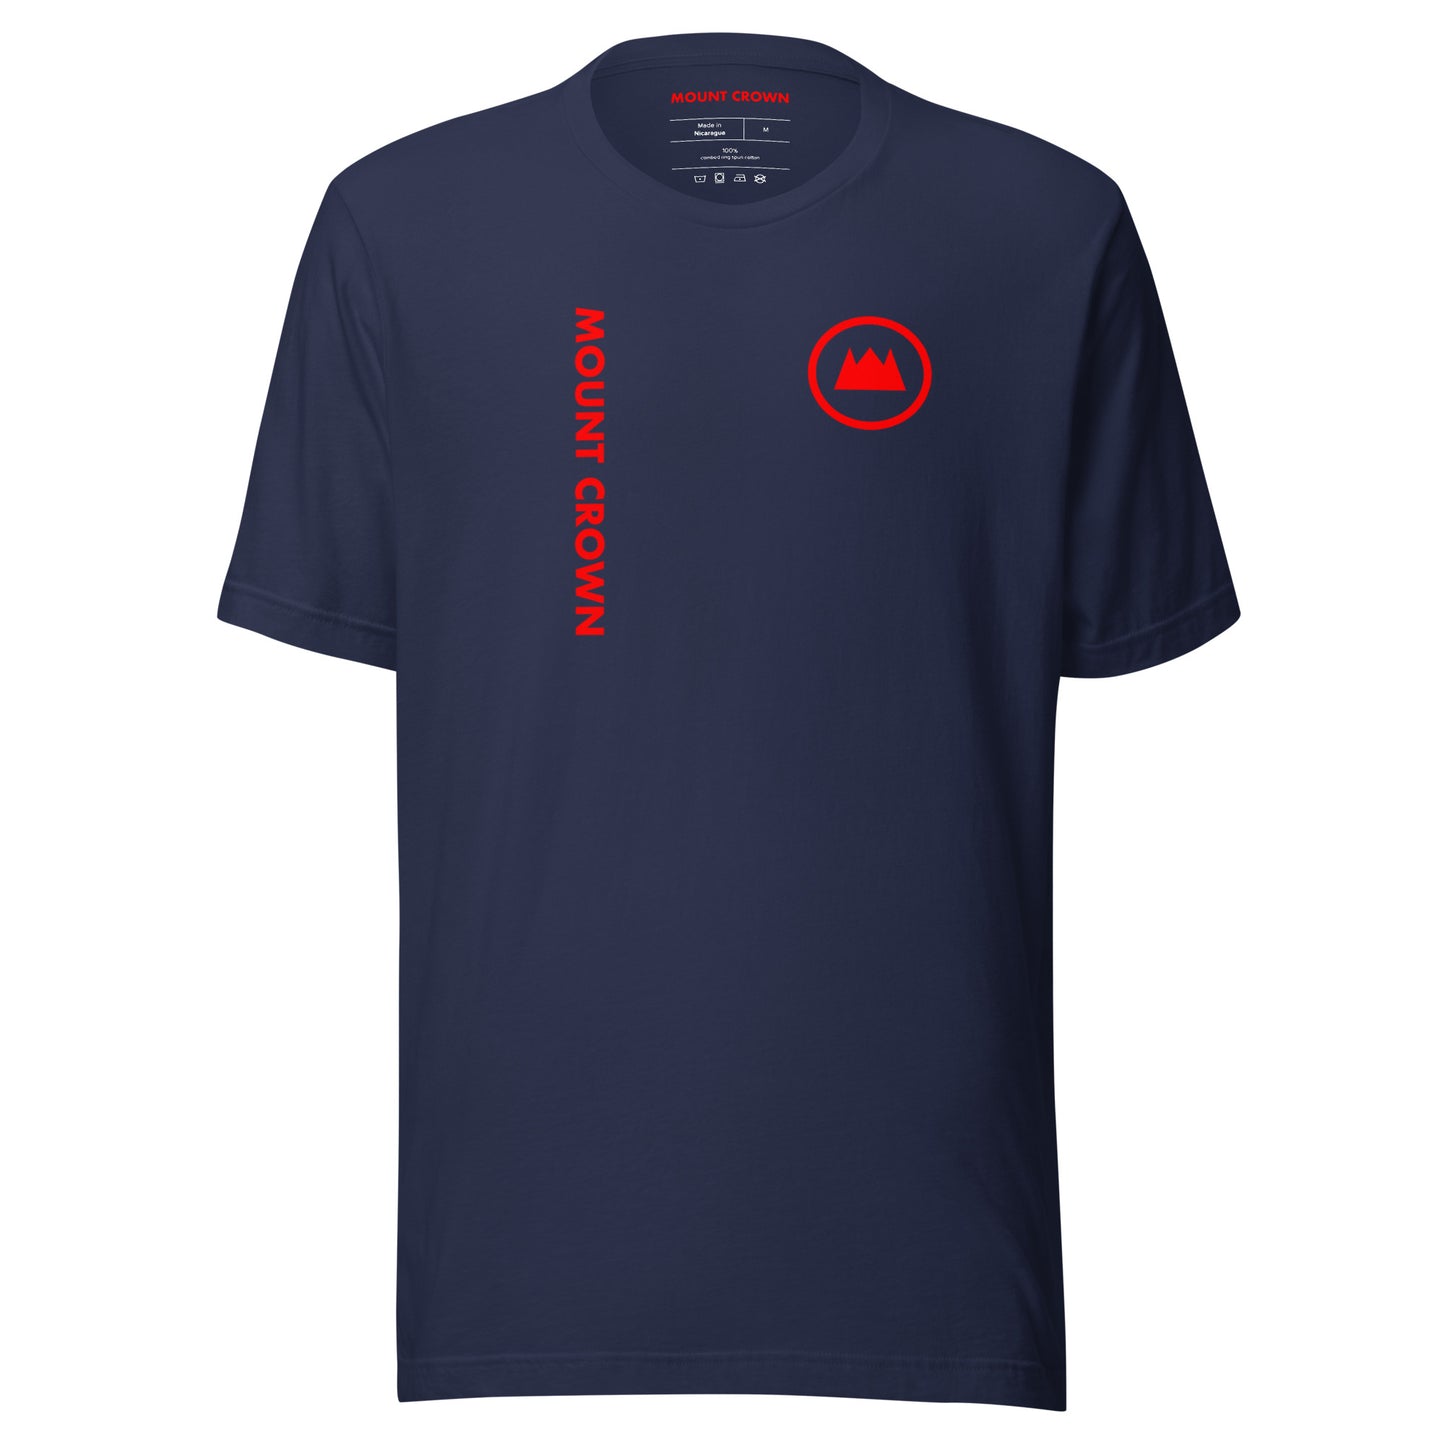 MOUNT CROWN (R)3 T-shirt